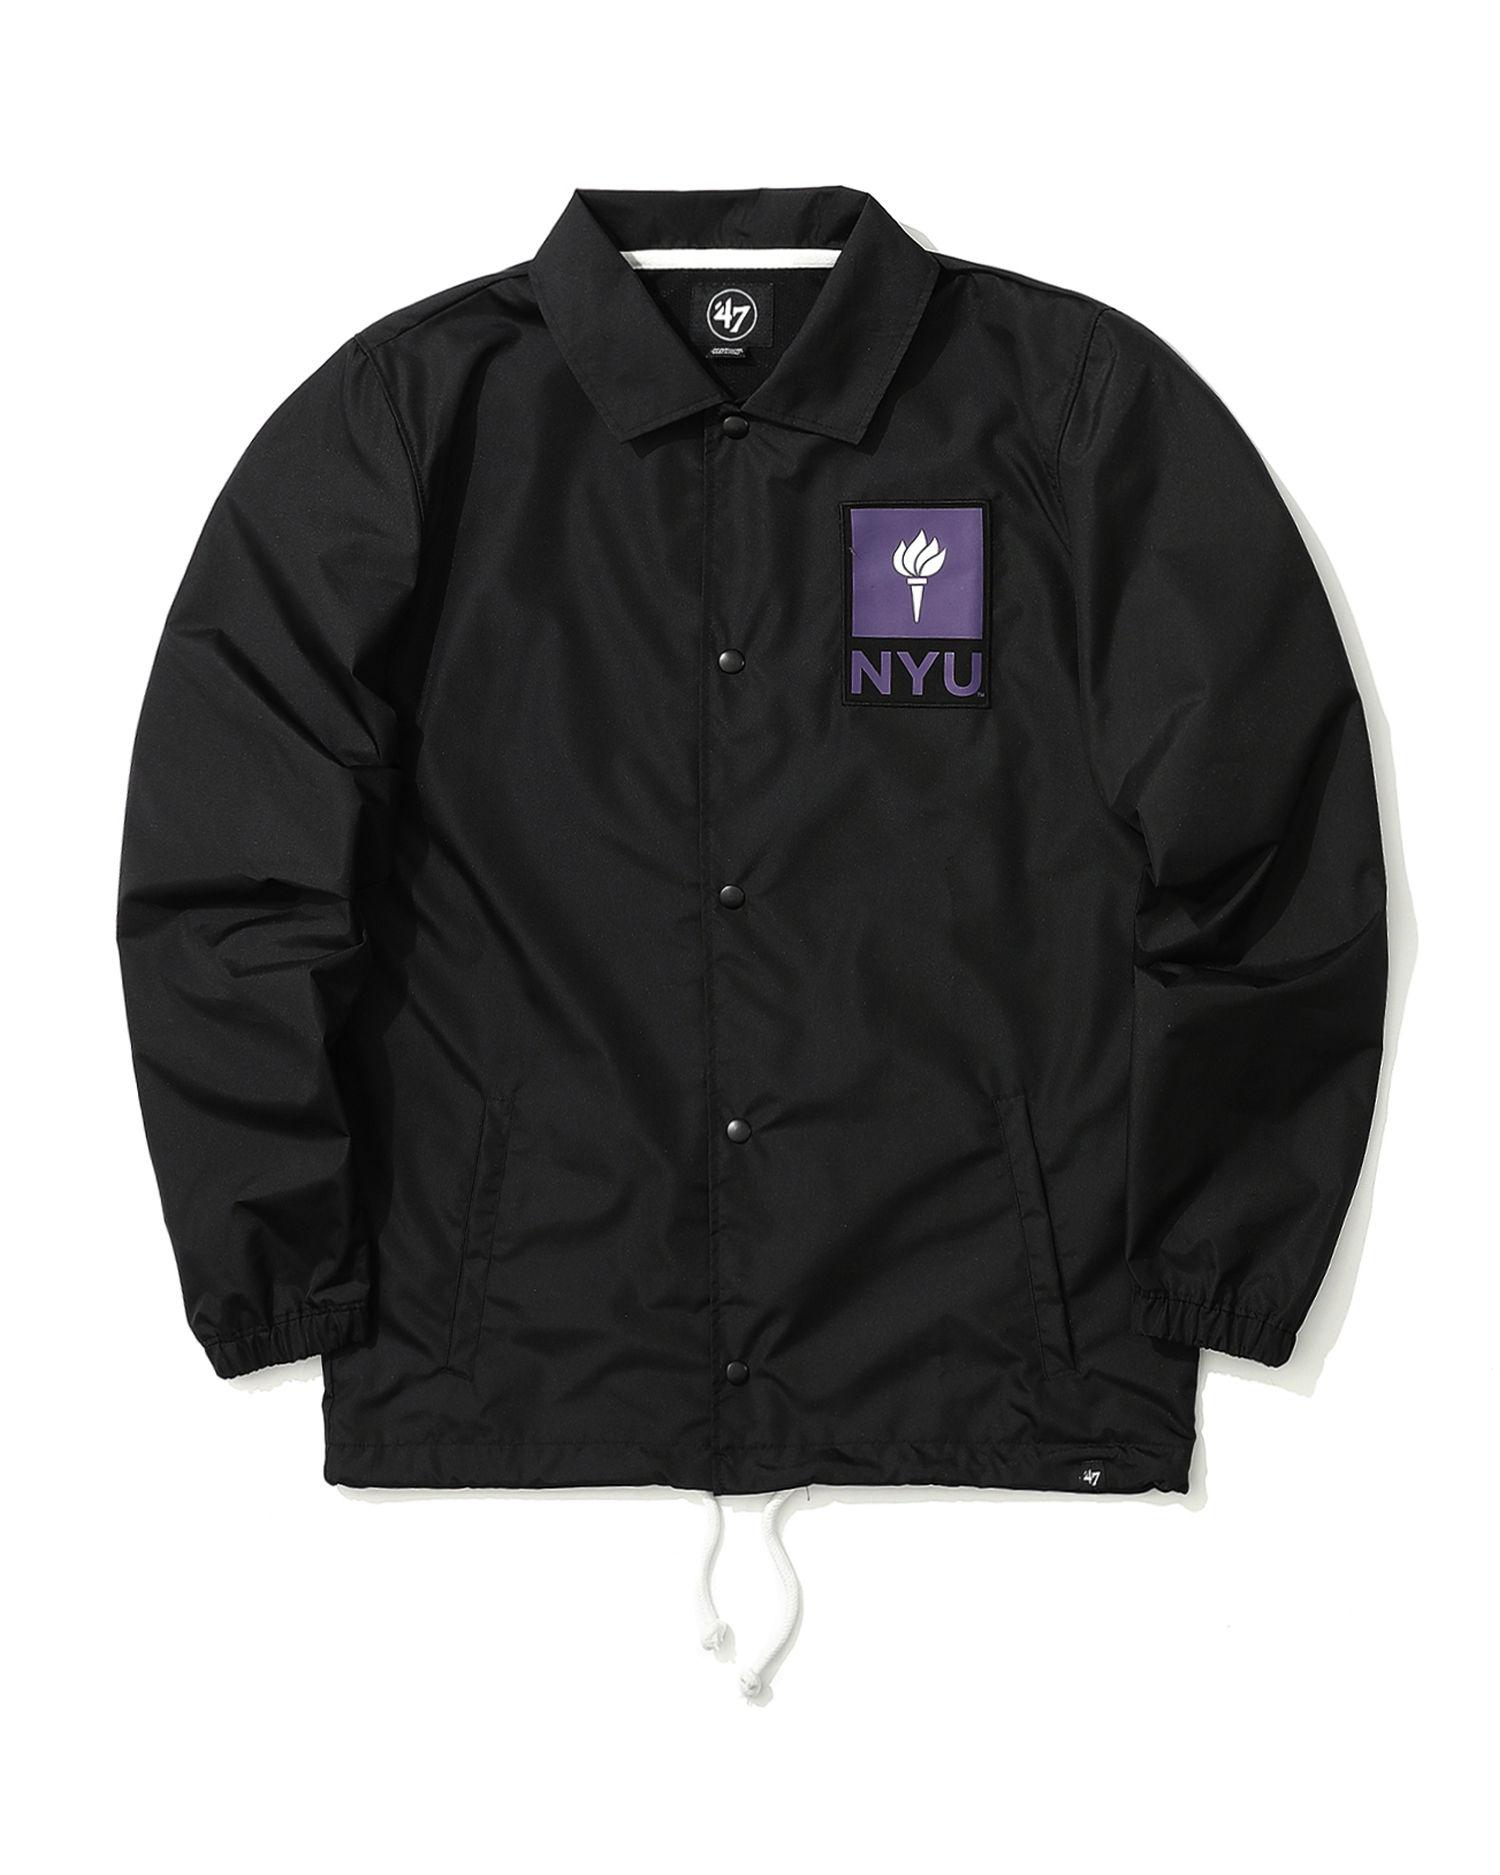 NYU coach jacket by '47